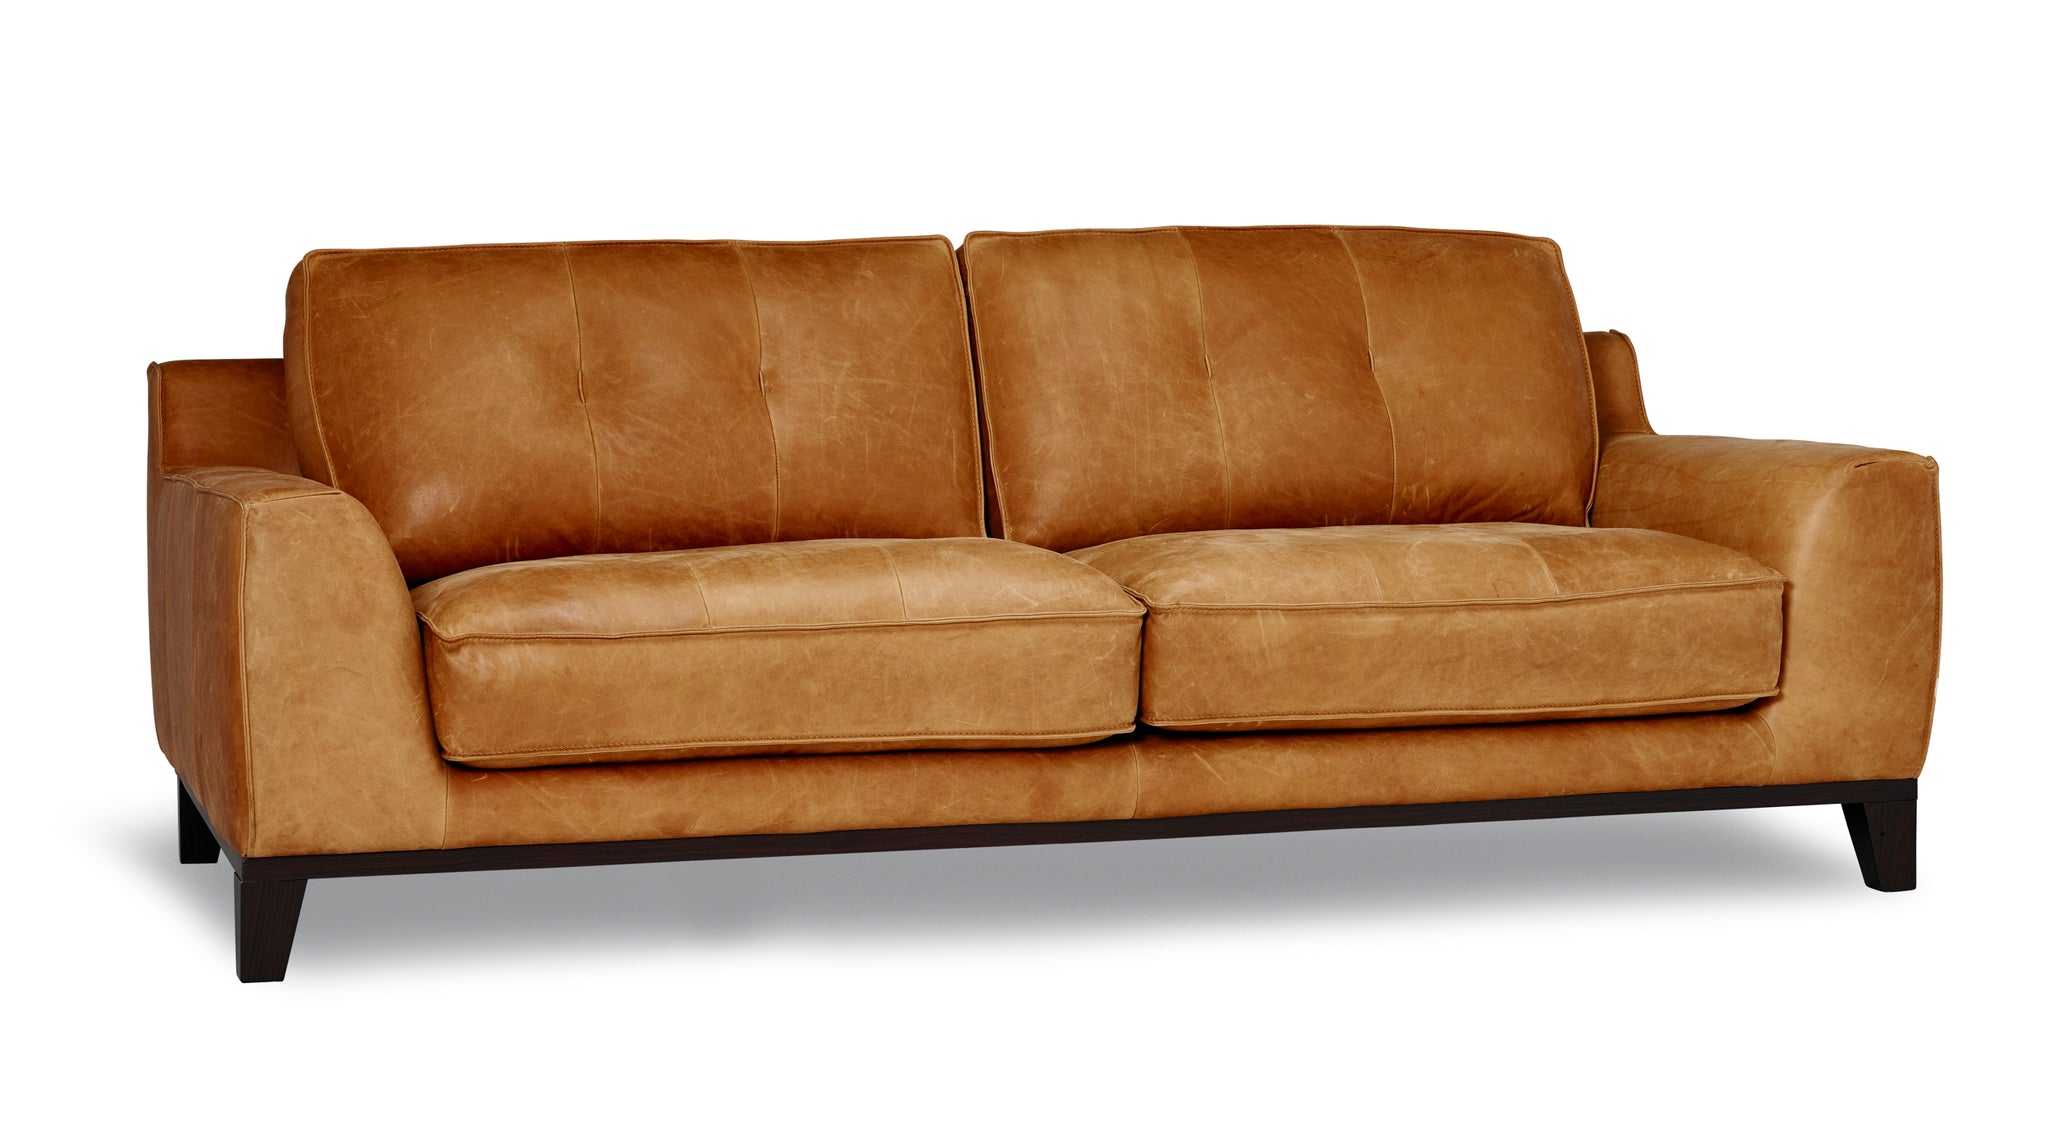 Picture of Bruna Leather Sofa